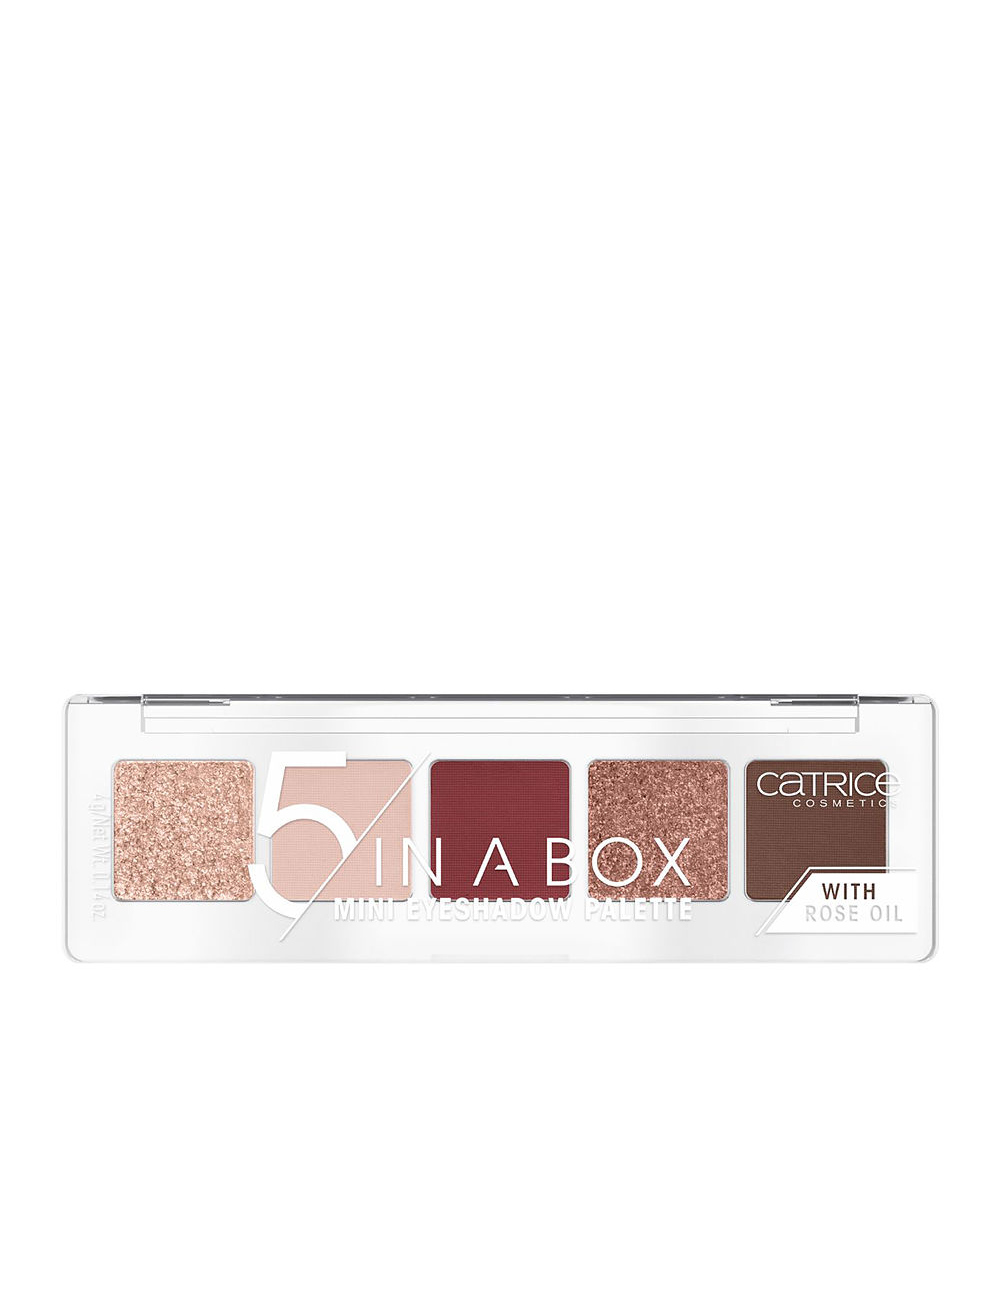 Catrice 5 in A box mini eyeshadow palette #060-vivid burgundy look